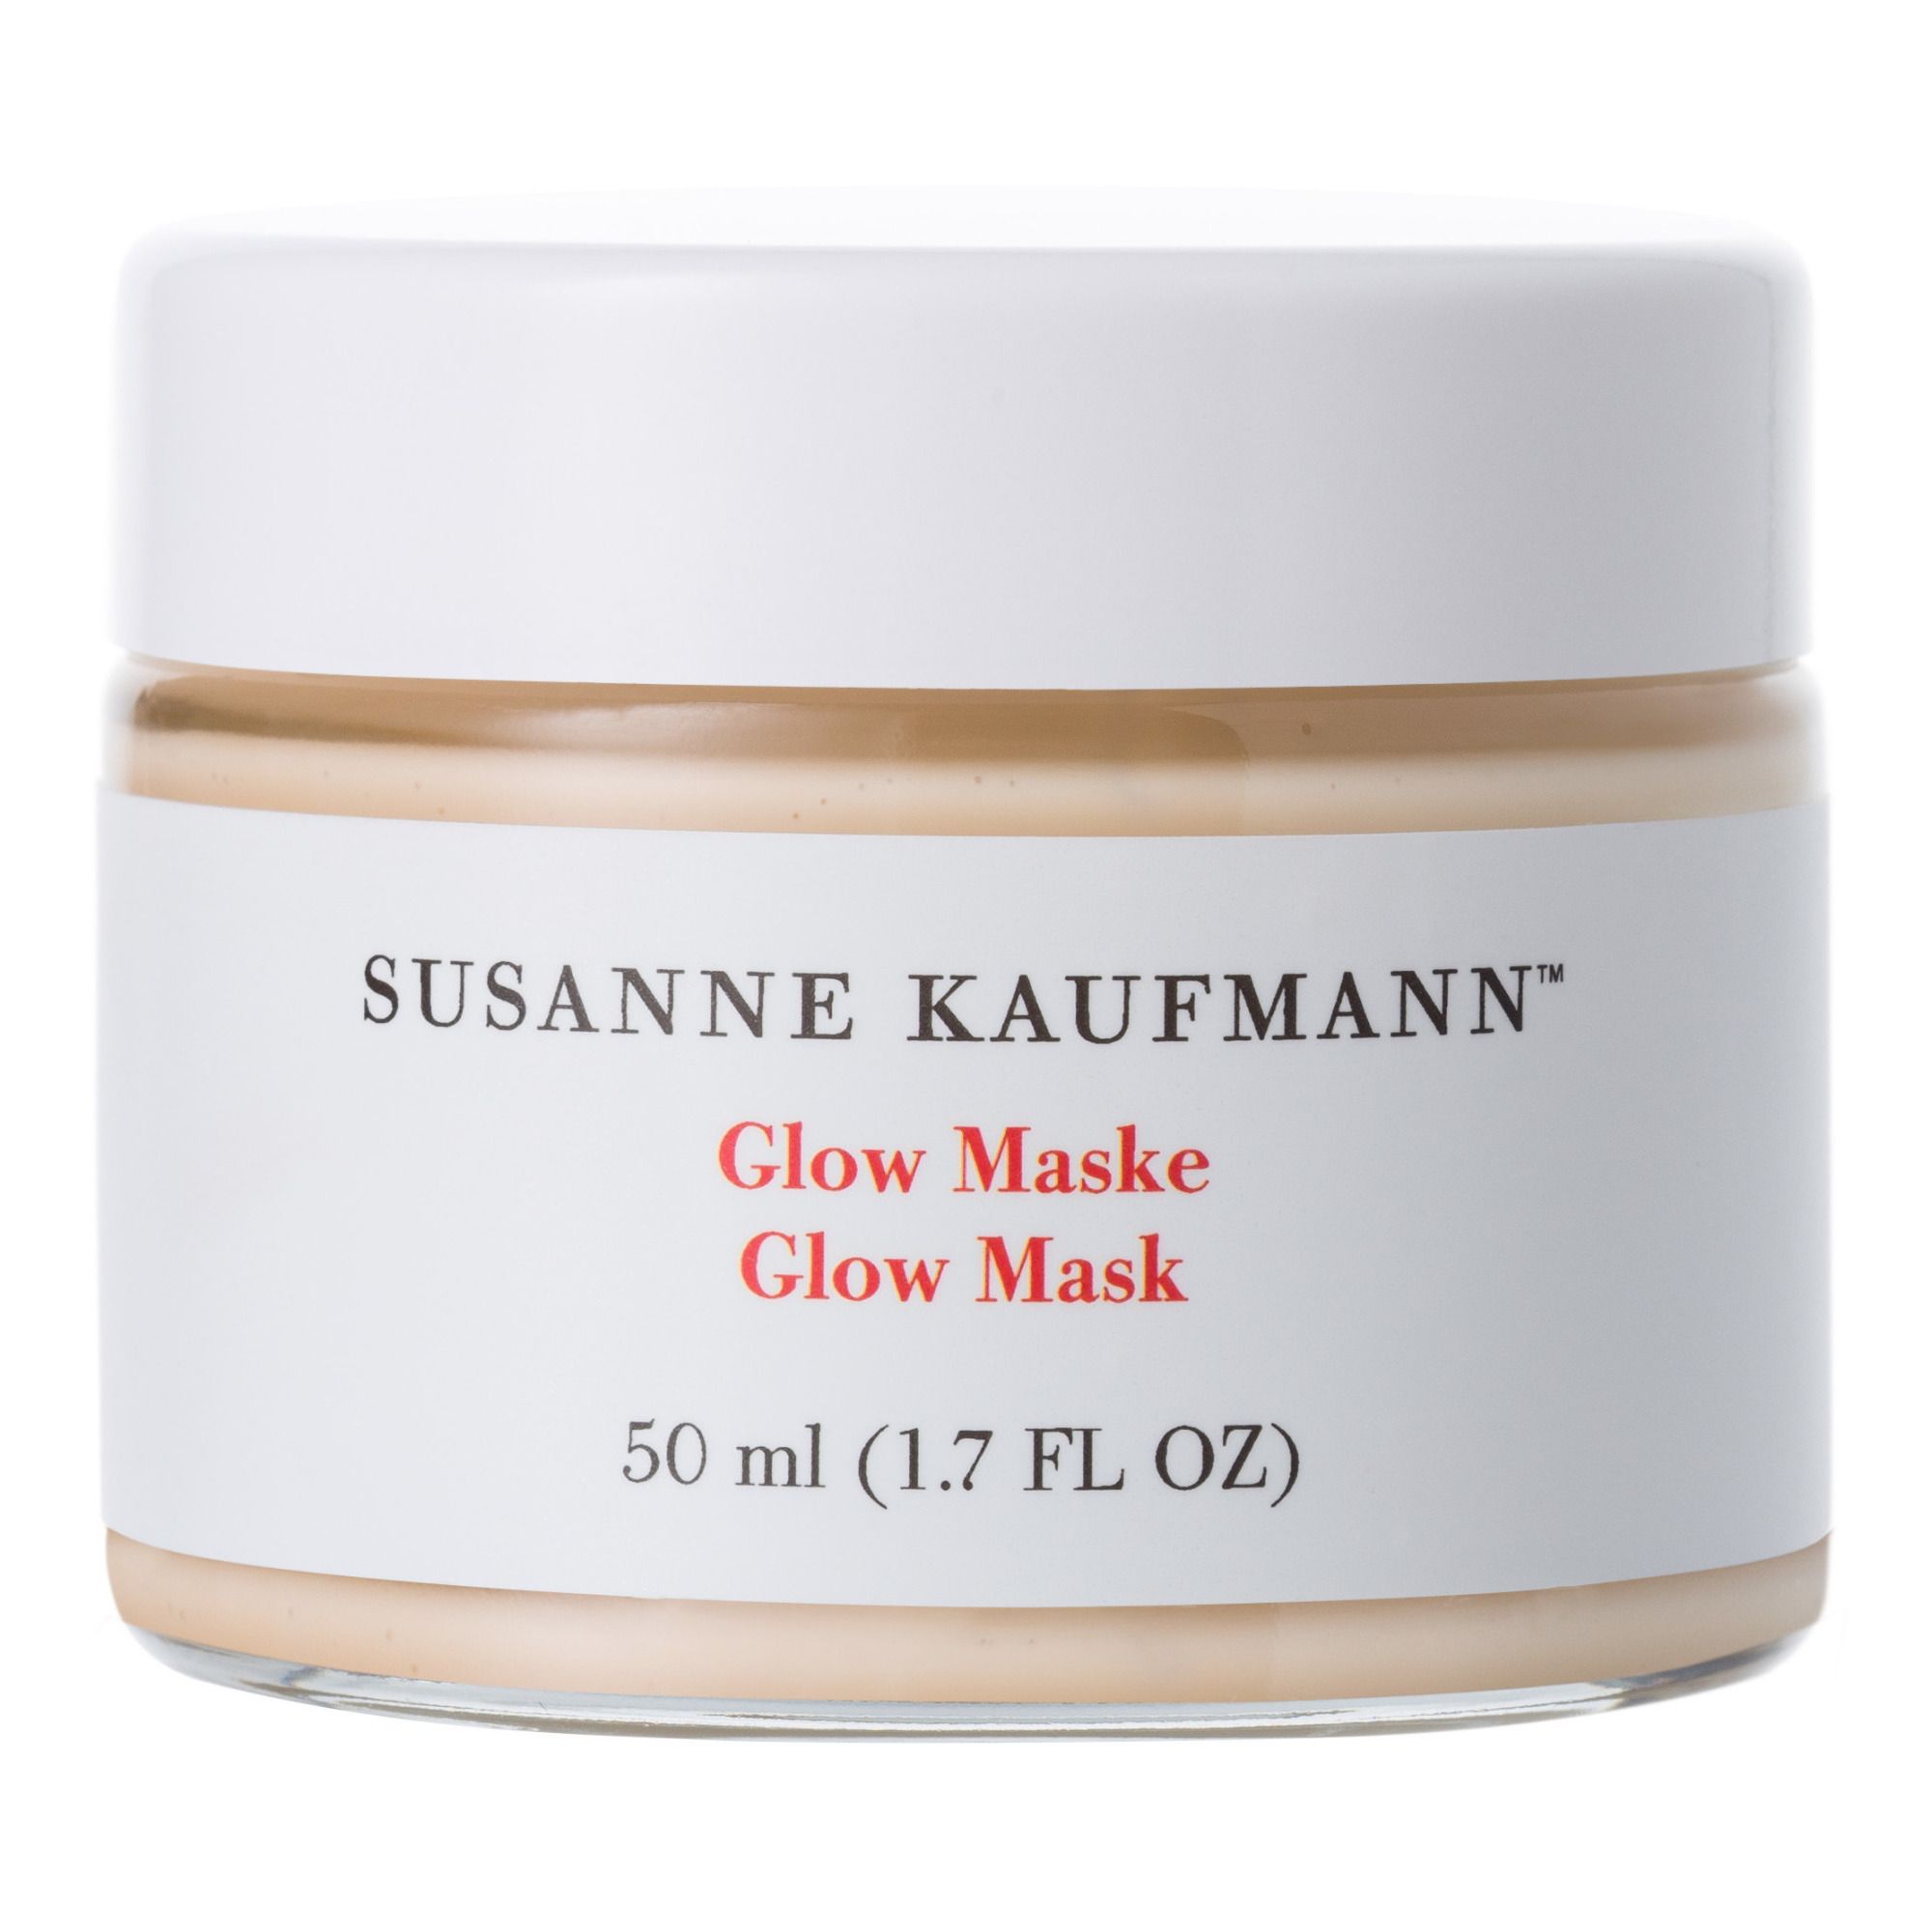 Susanne Kaufmann Glow Maske - 50 ml